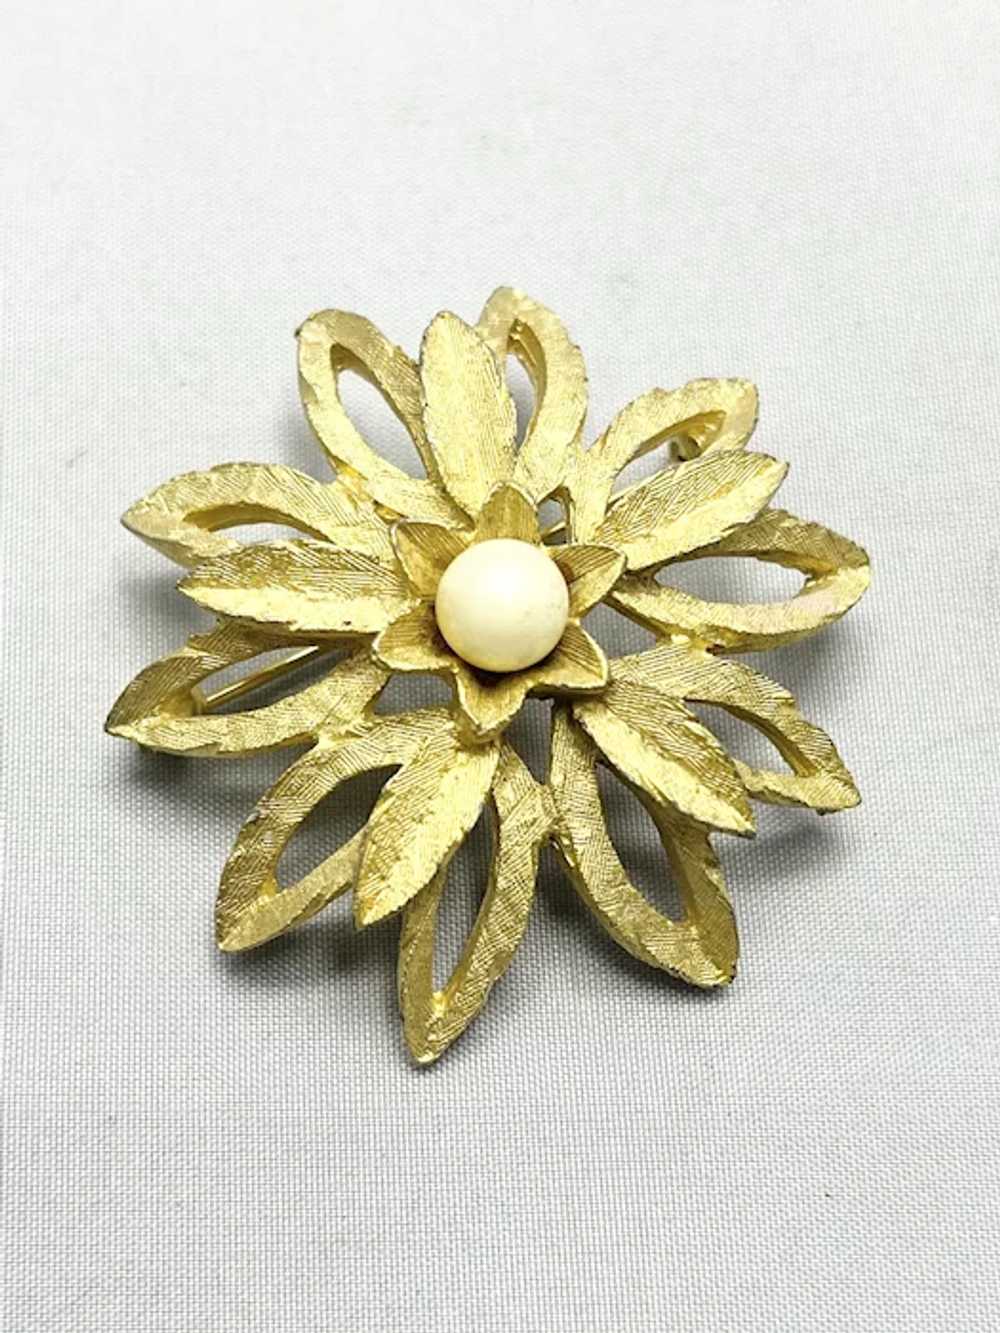 Vintage Gold Tone Flower Brooch Pin - image 4